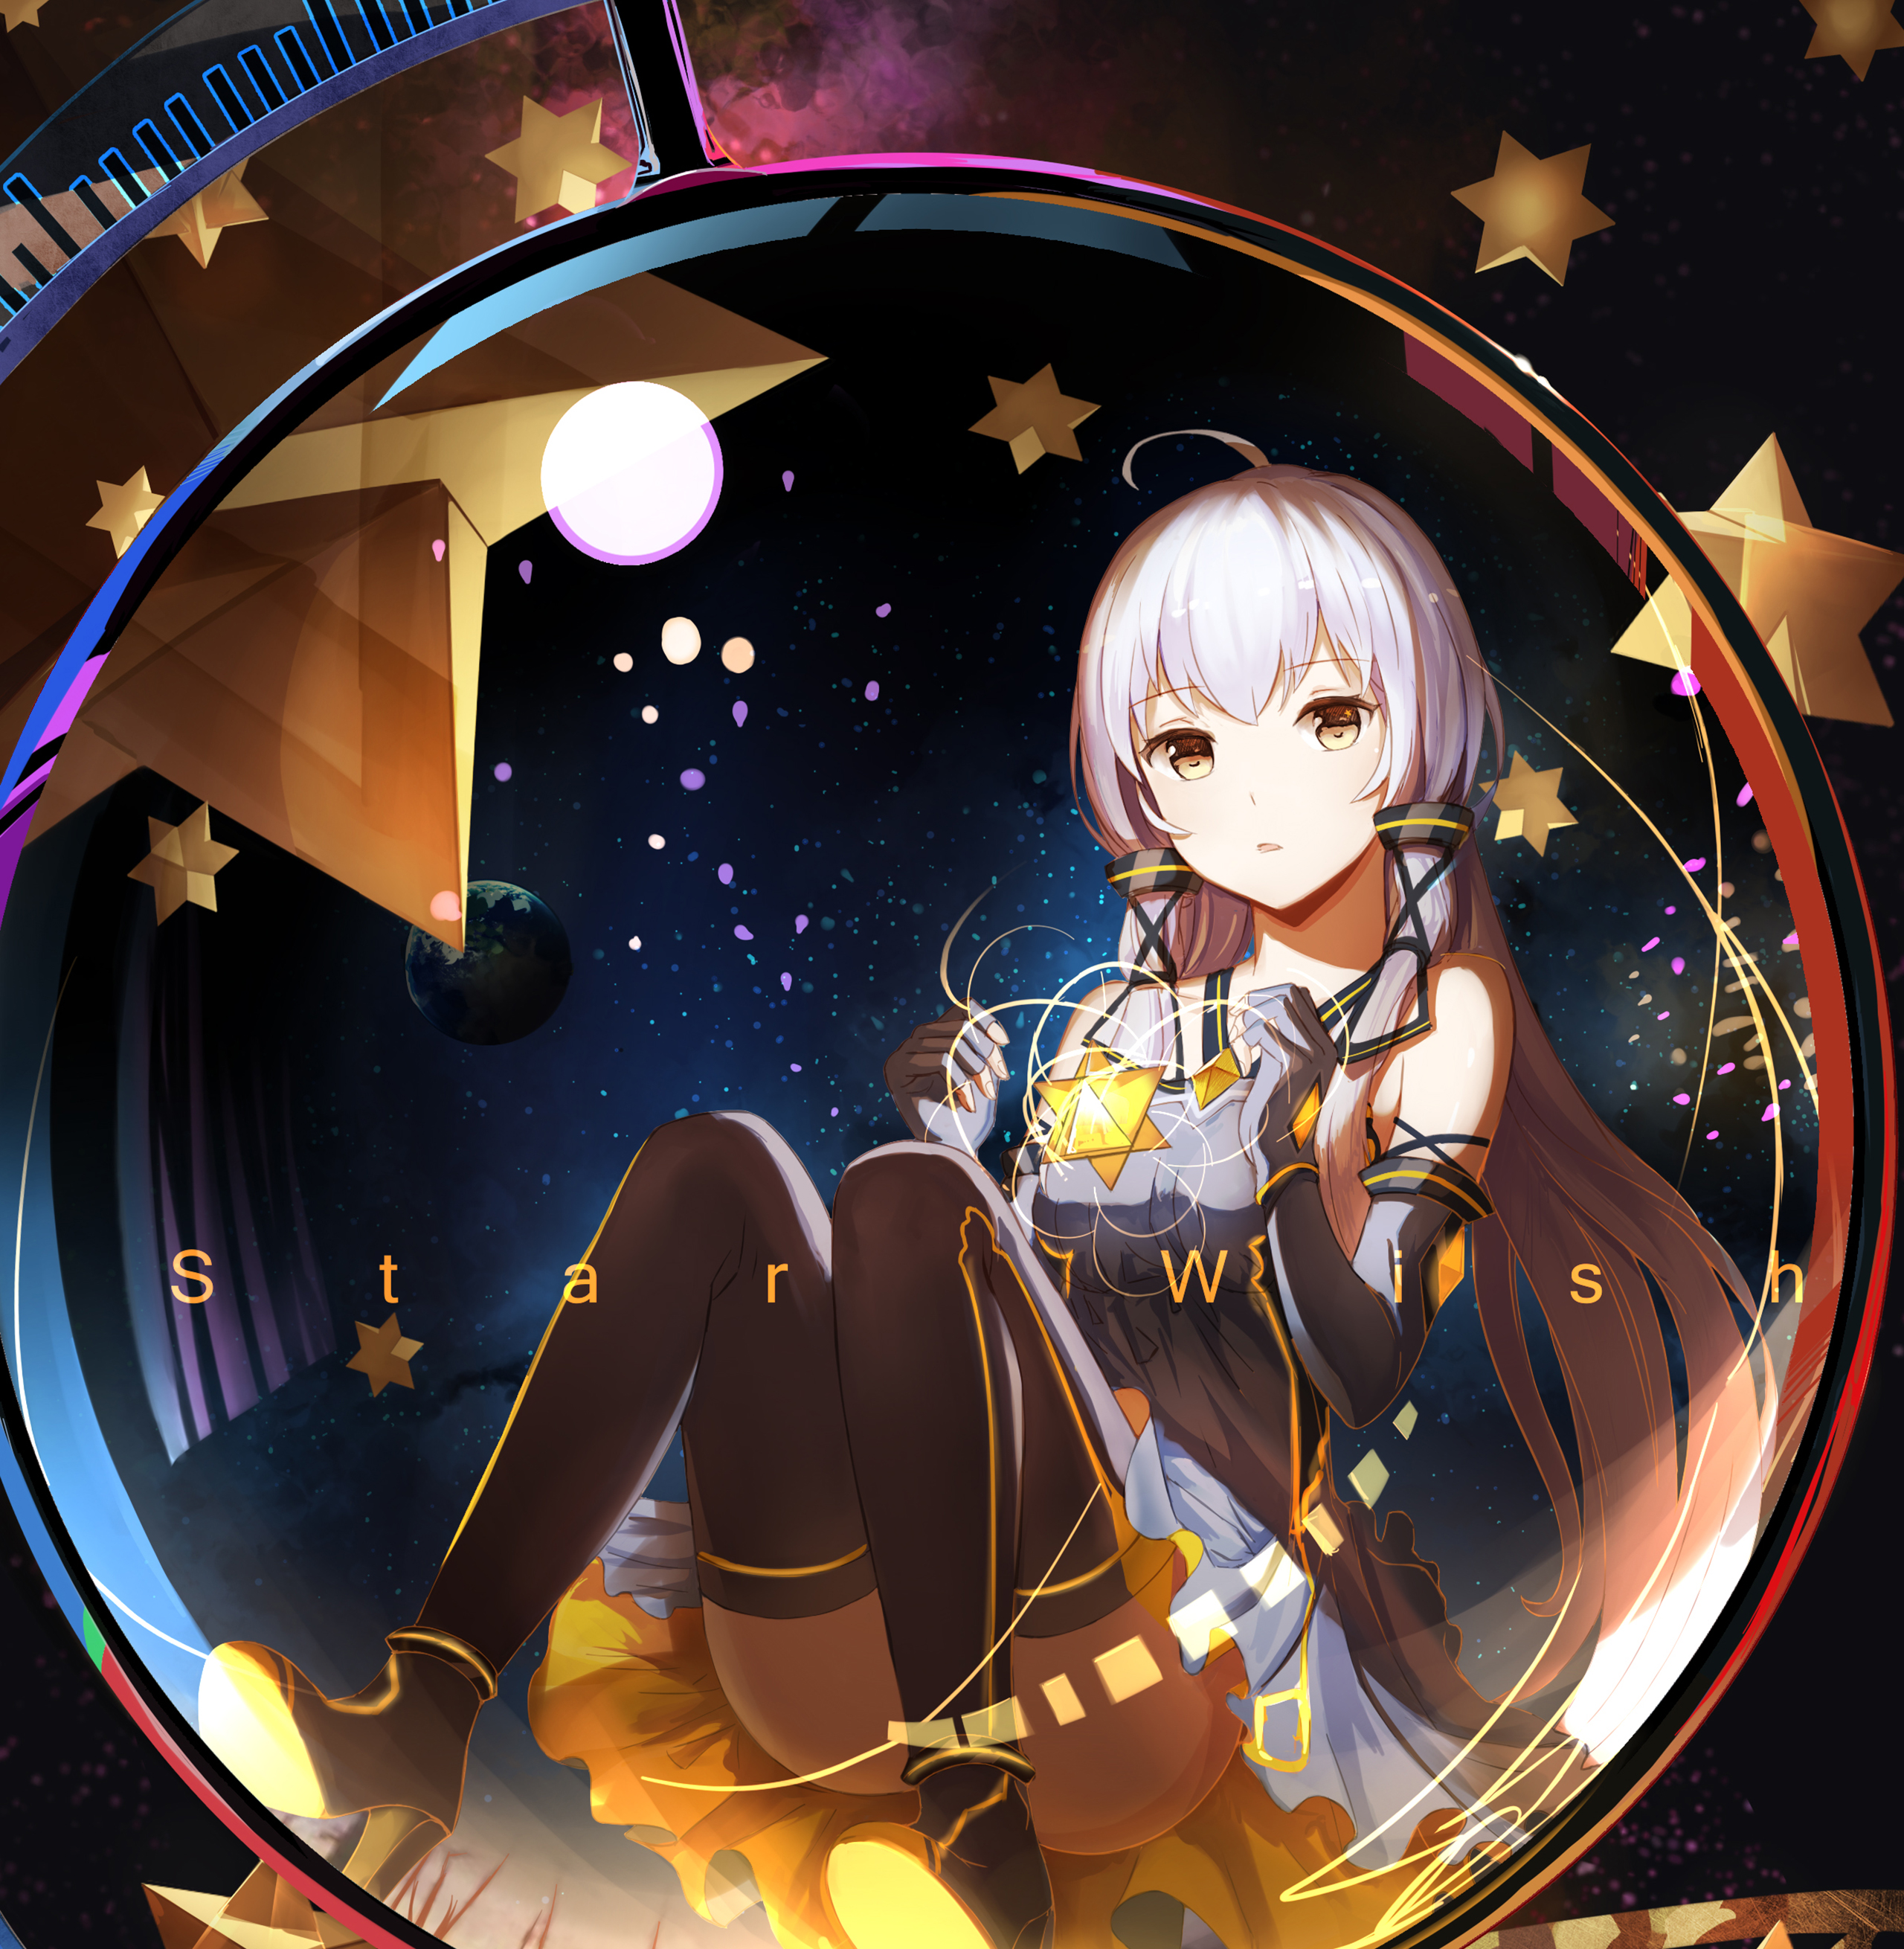  Anime  Girl With Magic  2560x2620 Wallpaper teahub io